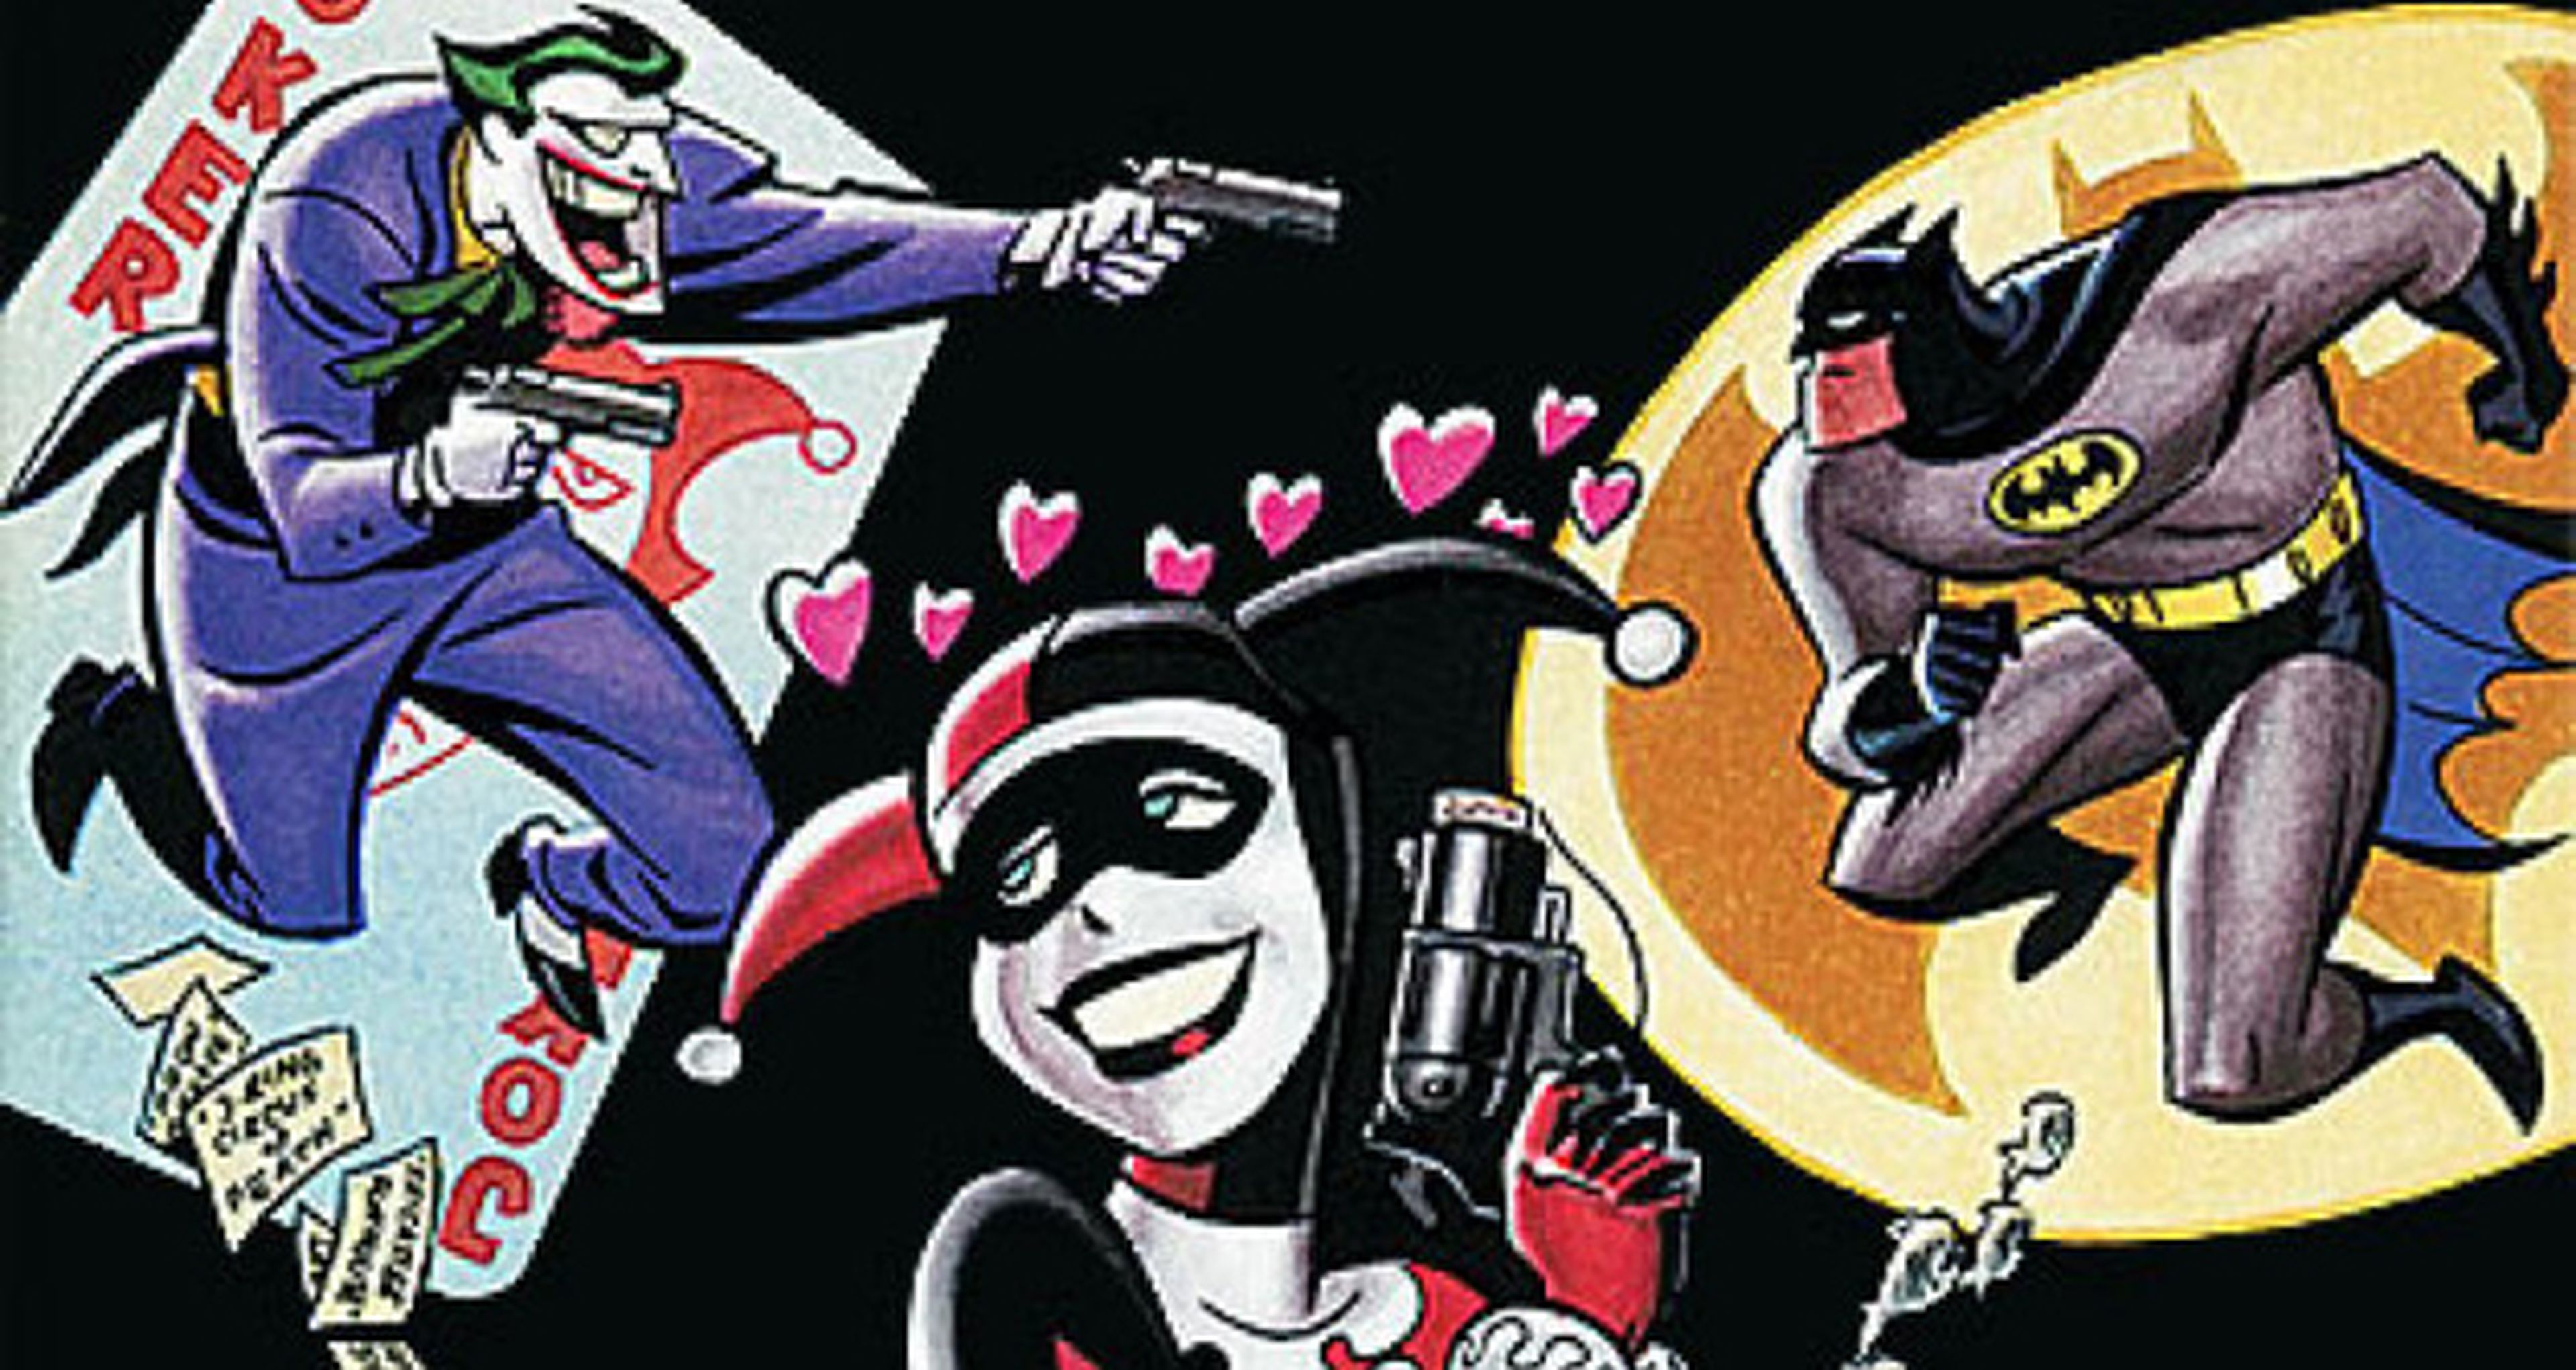 Batman: Los mejores cómics del Caballero Oscuro